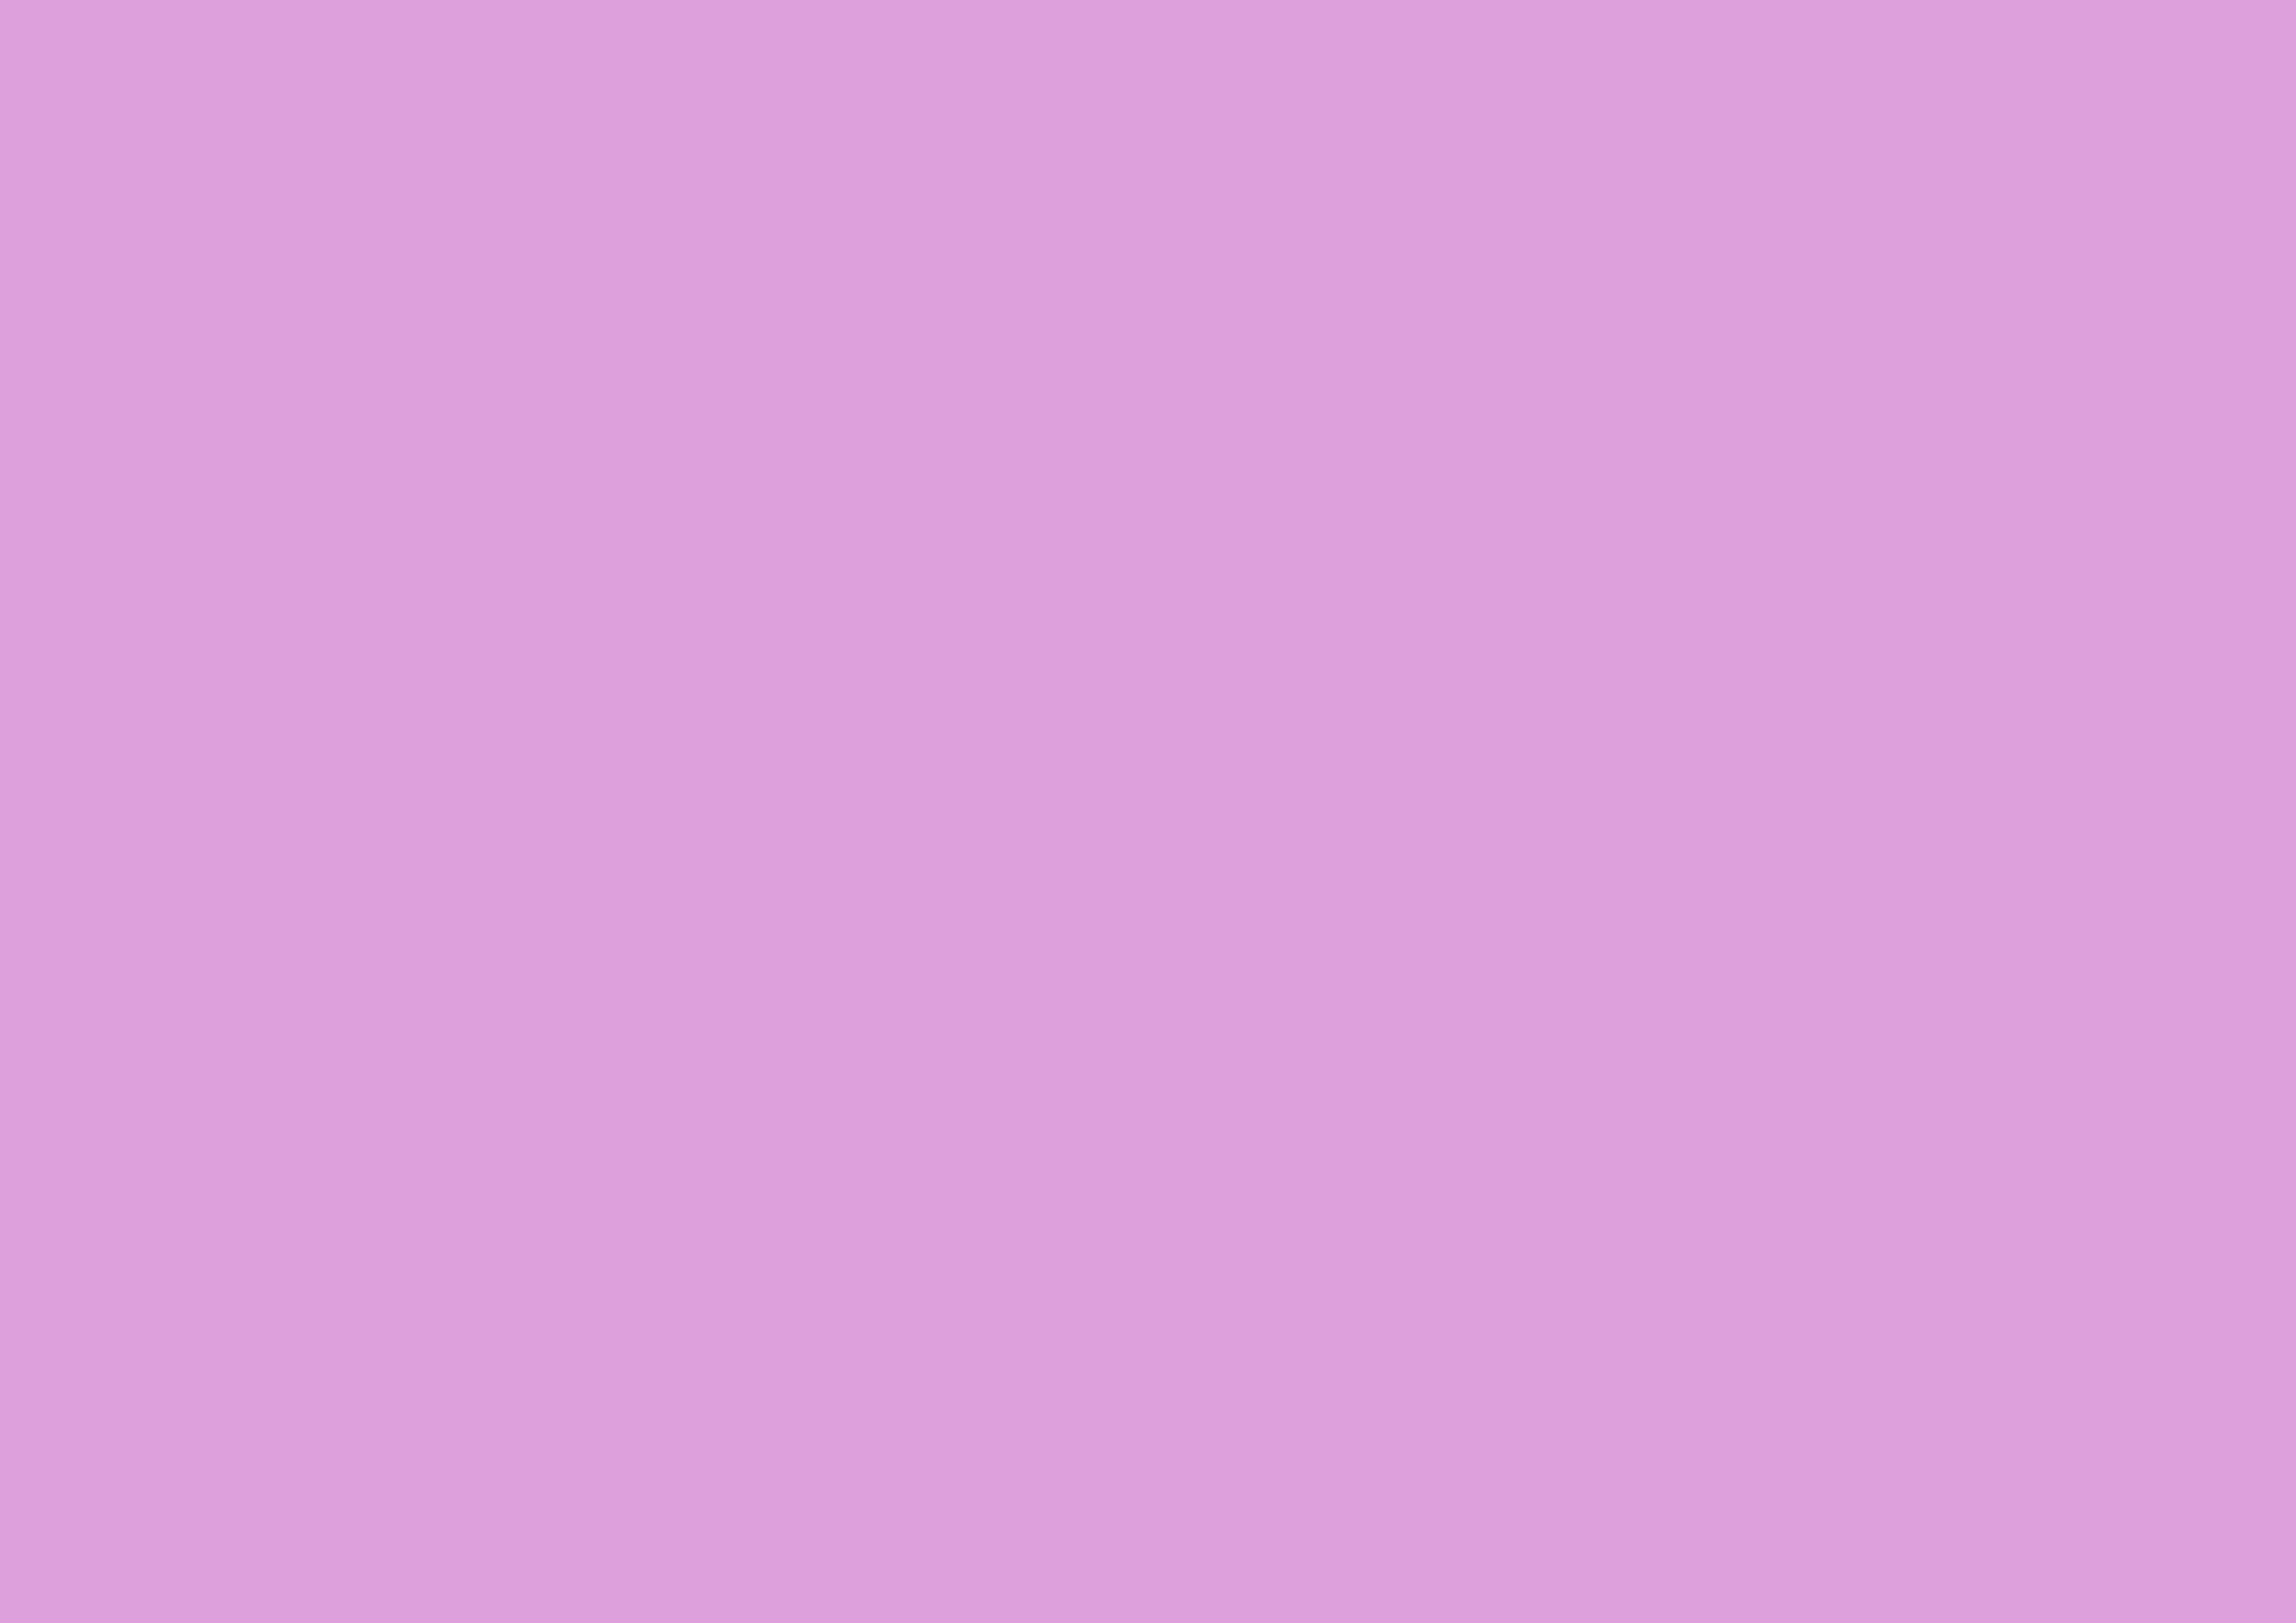 3508x2480 Medium Lavender Magenta Solid Color Background